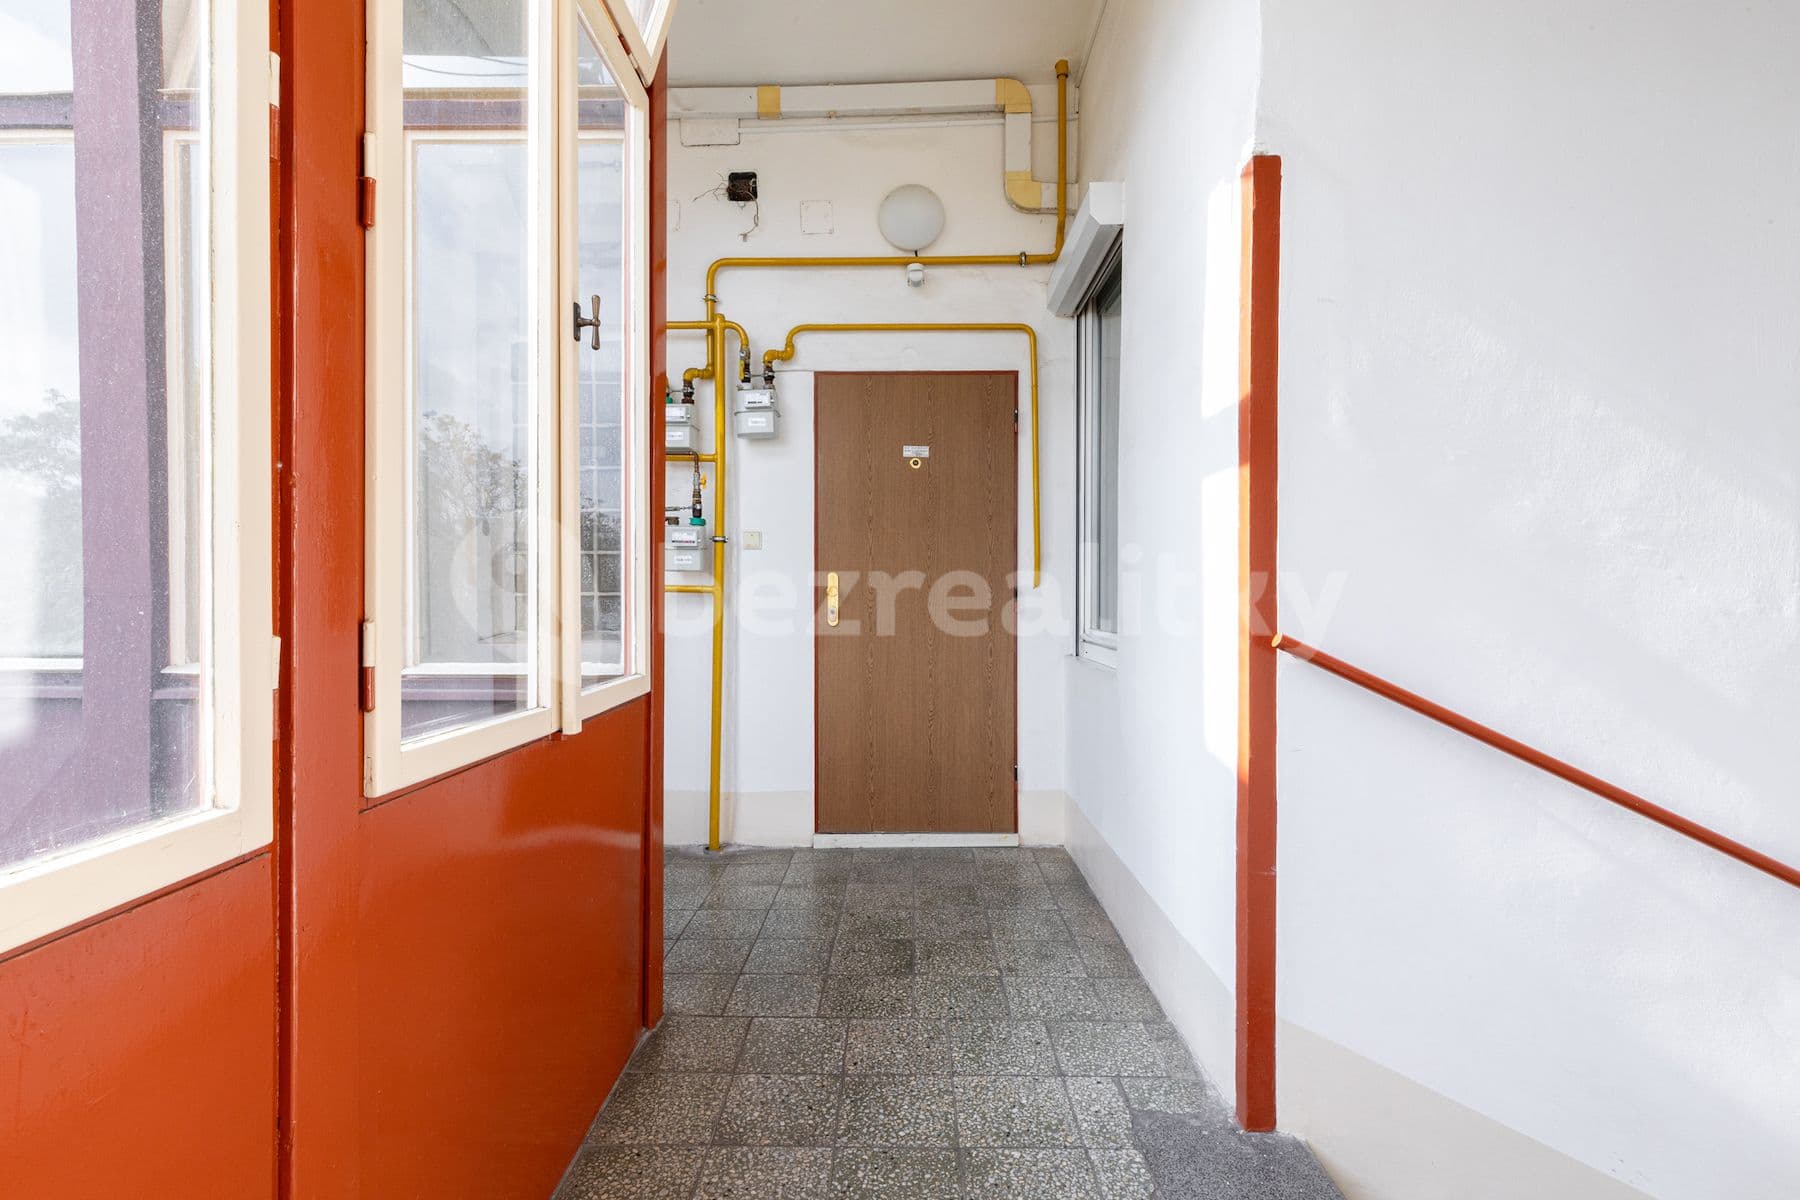 2 bedroom with open-plan kitchen flat for sale, 68 m², Neklanova, Prague, Prague